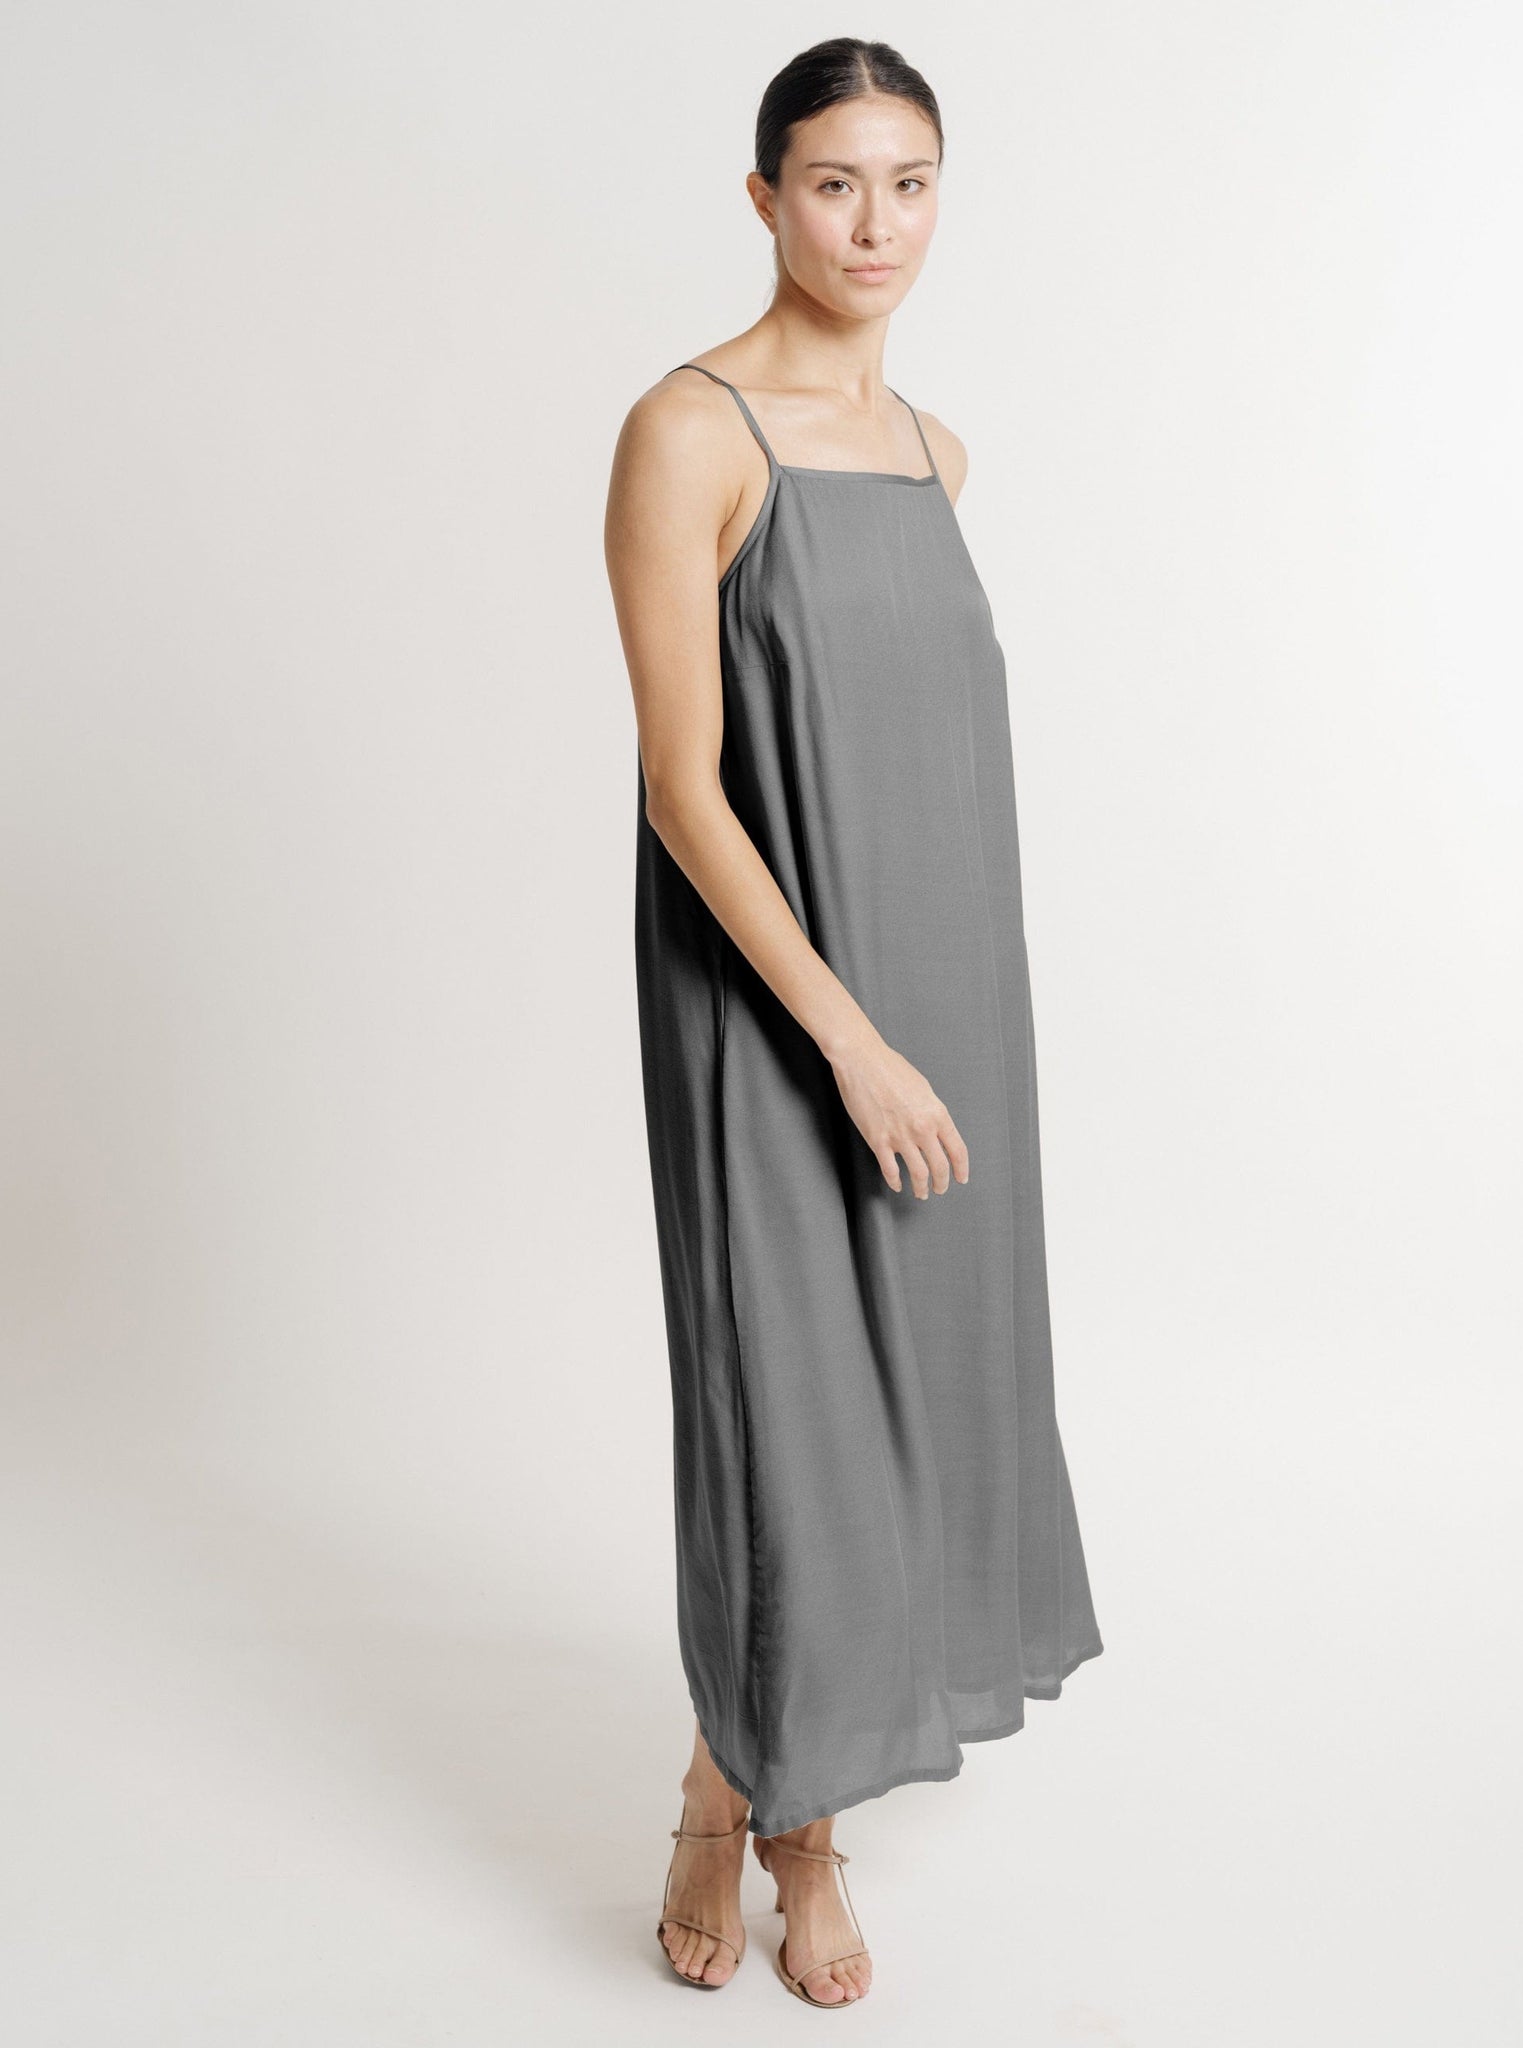 The model is showcasing a like-new Kate Dress - Slate - Sample.